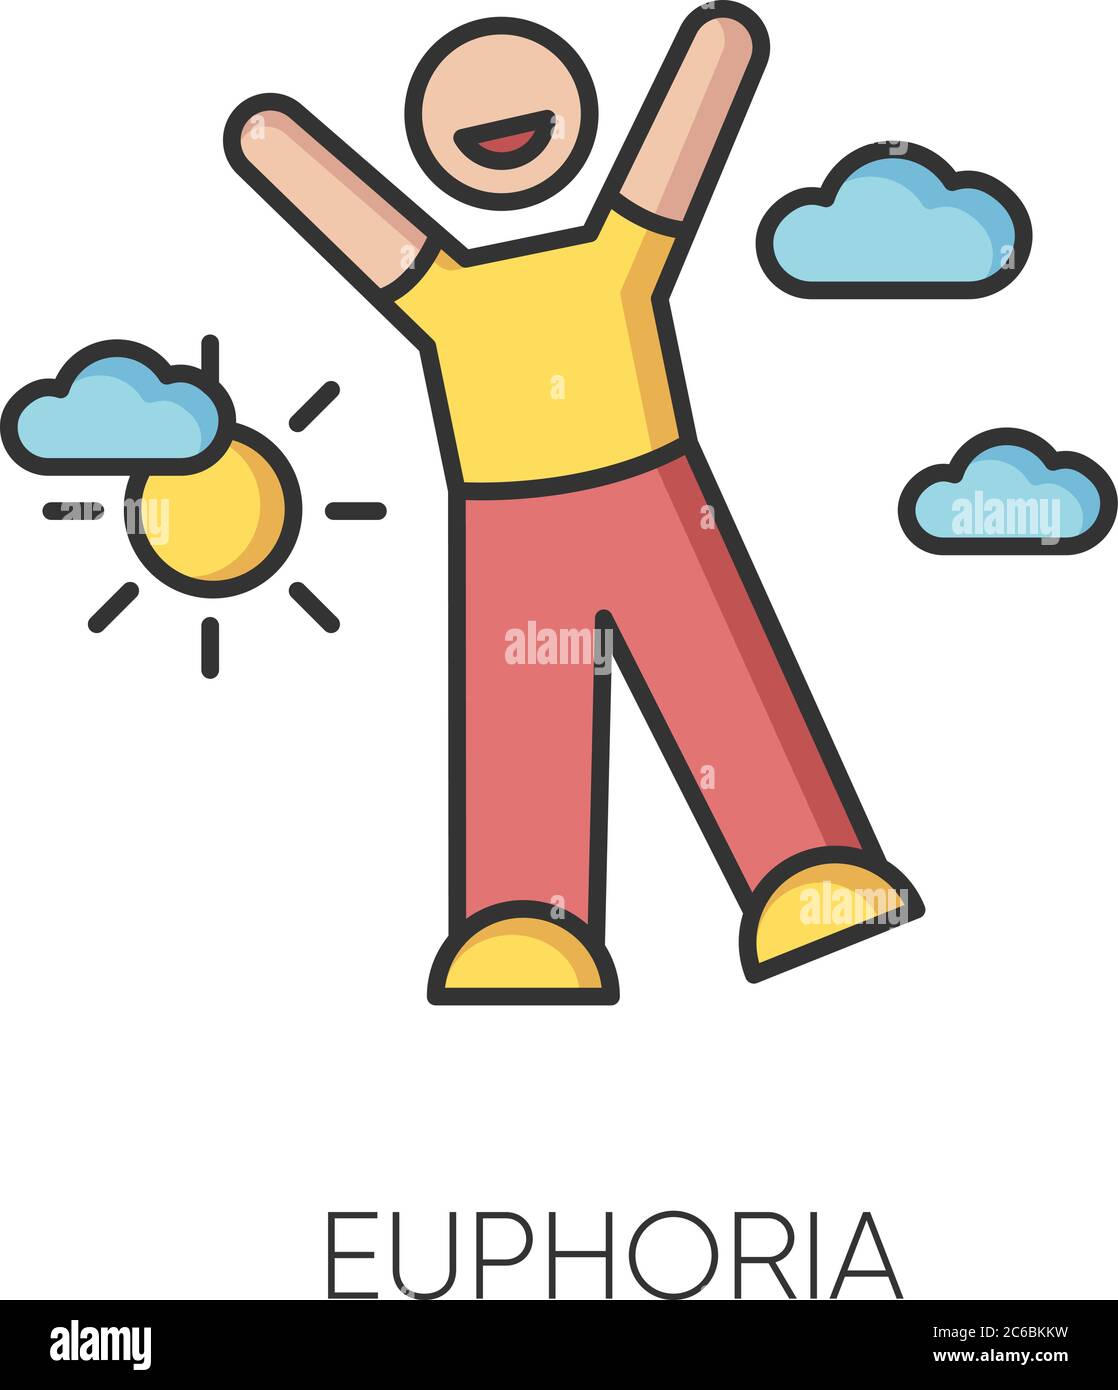 Euphoric logo Stock Vector Images - Alamy